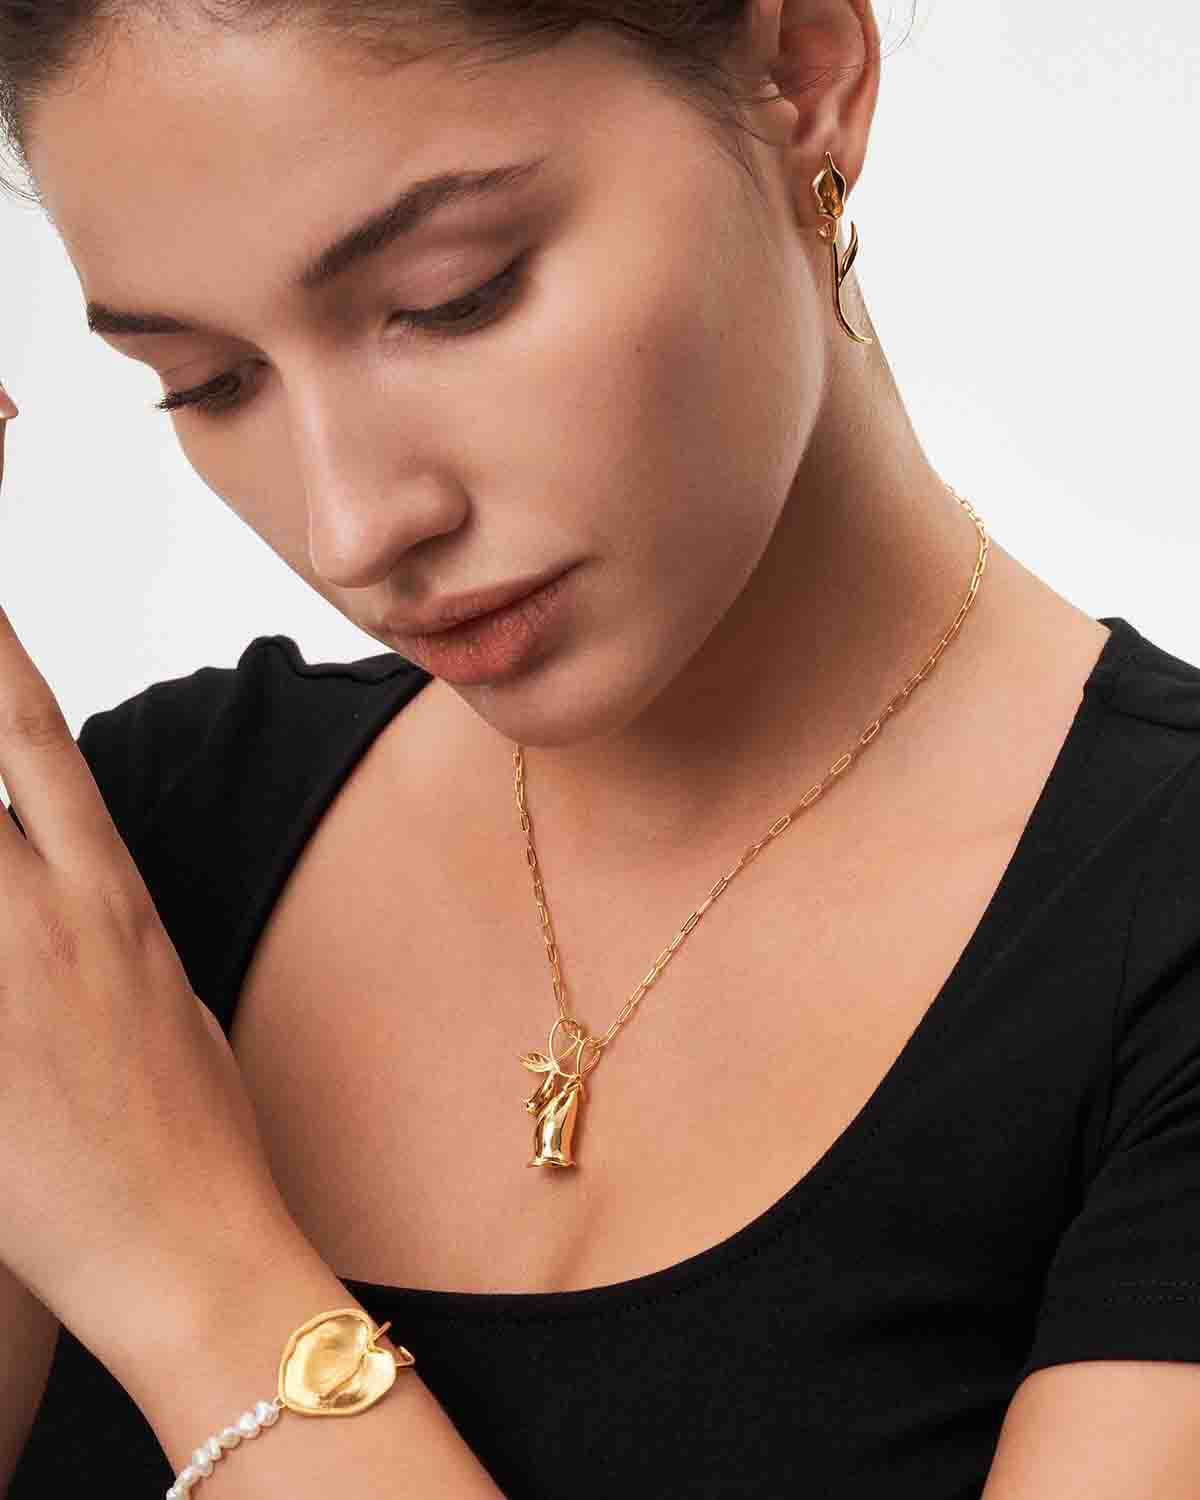 a woman wearing a black shirt and a gold bracelet